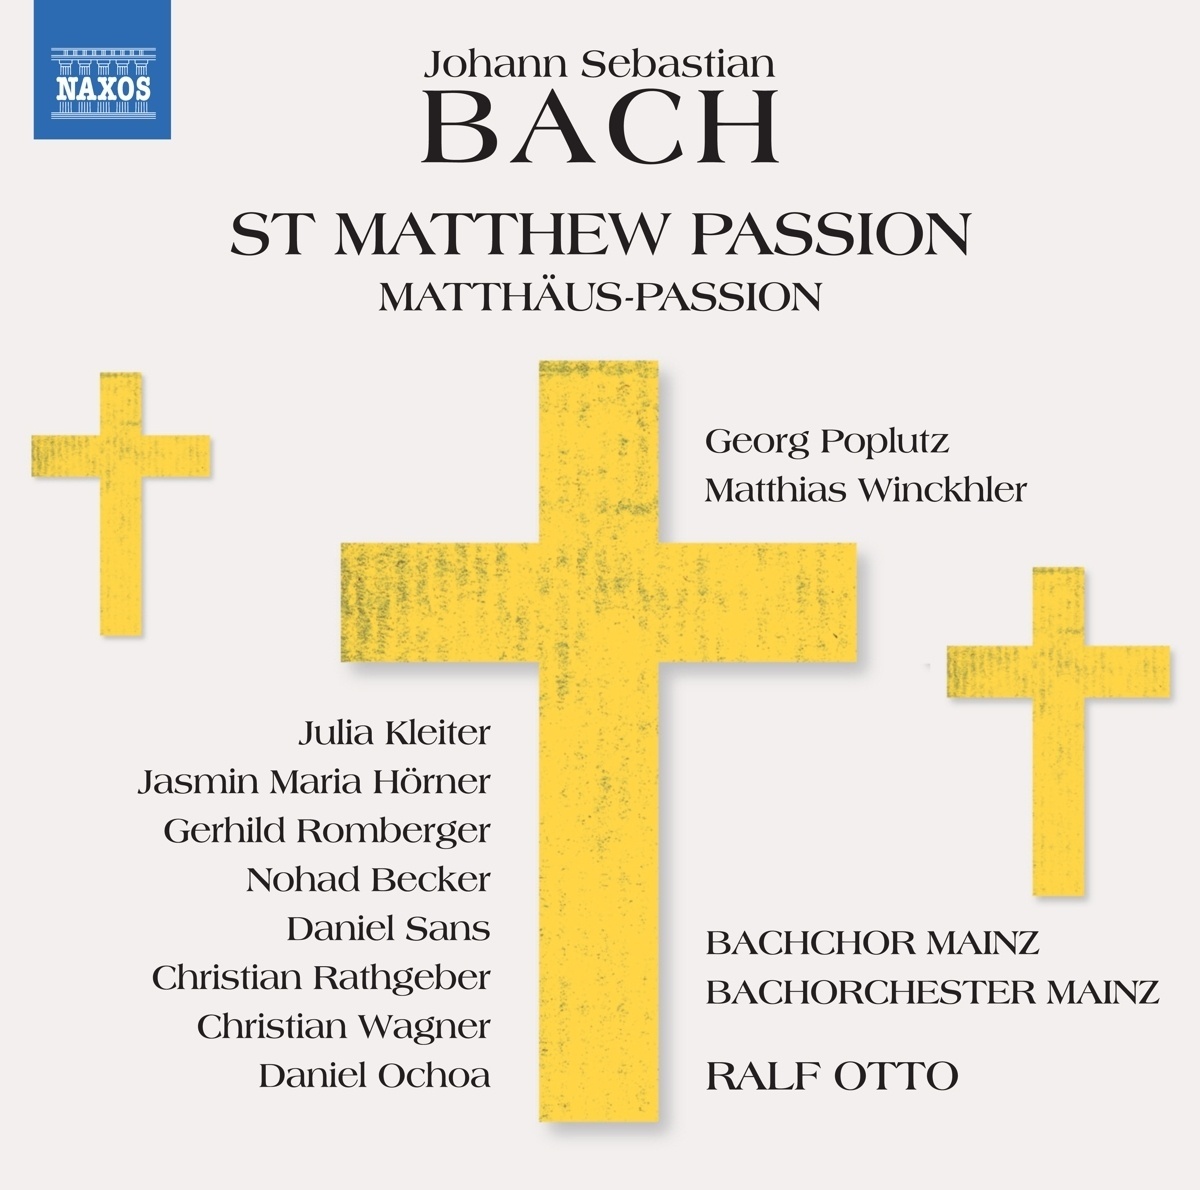 St Matthew Passion/Matthäus Passion - Ralf Otto  Bachchor Mainz  Bachorchester Mainz. (CD)